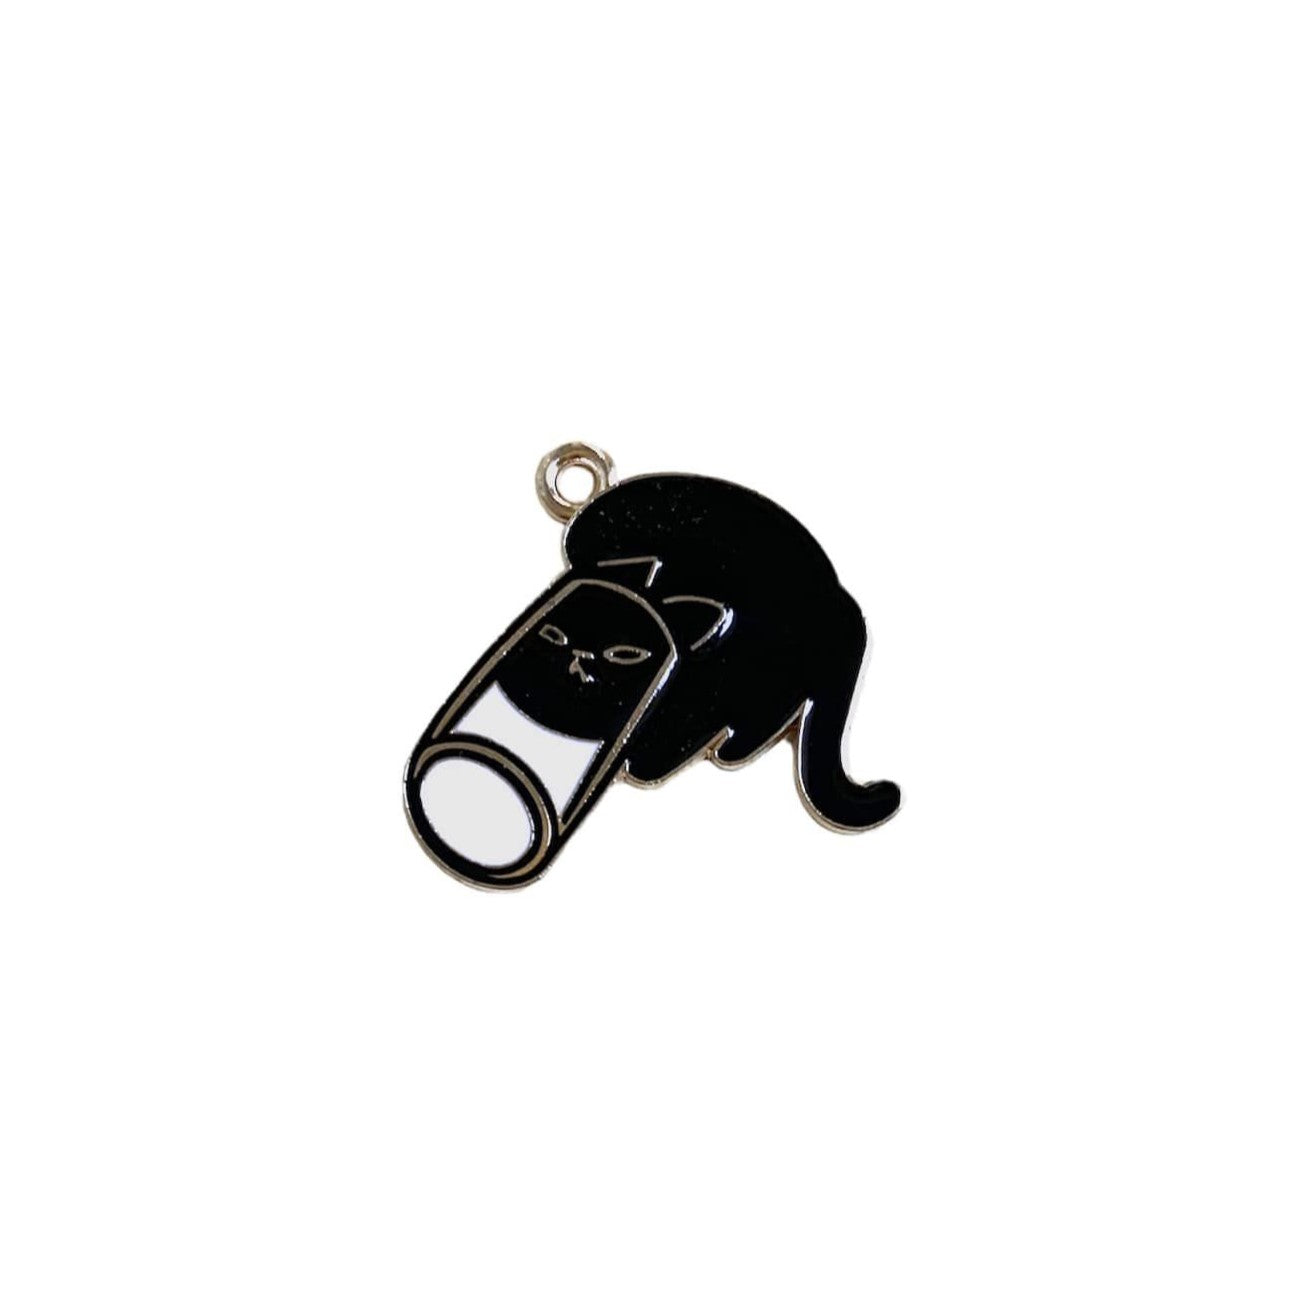 Animal Guide Necklaces - Black Cat Mischief